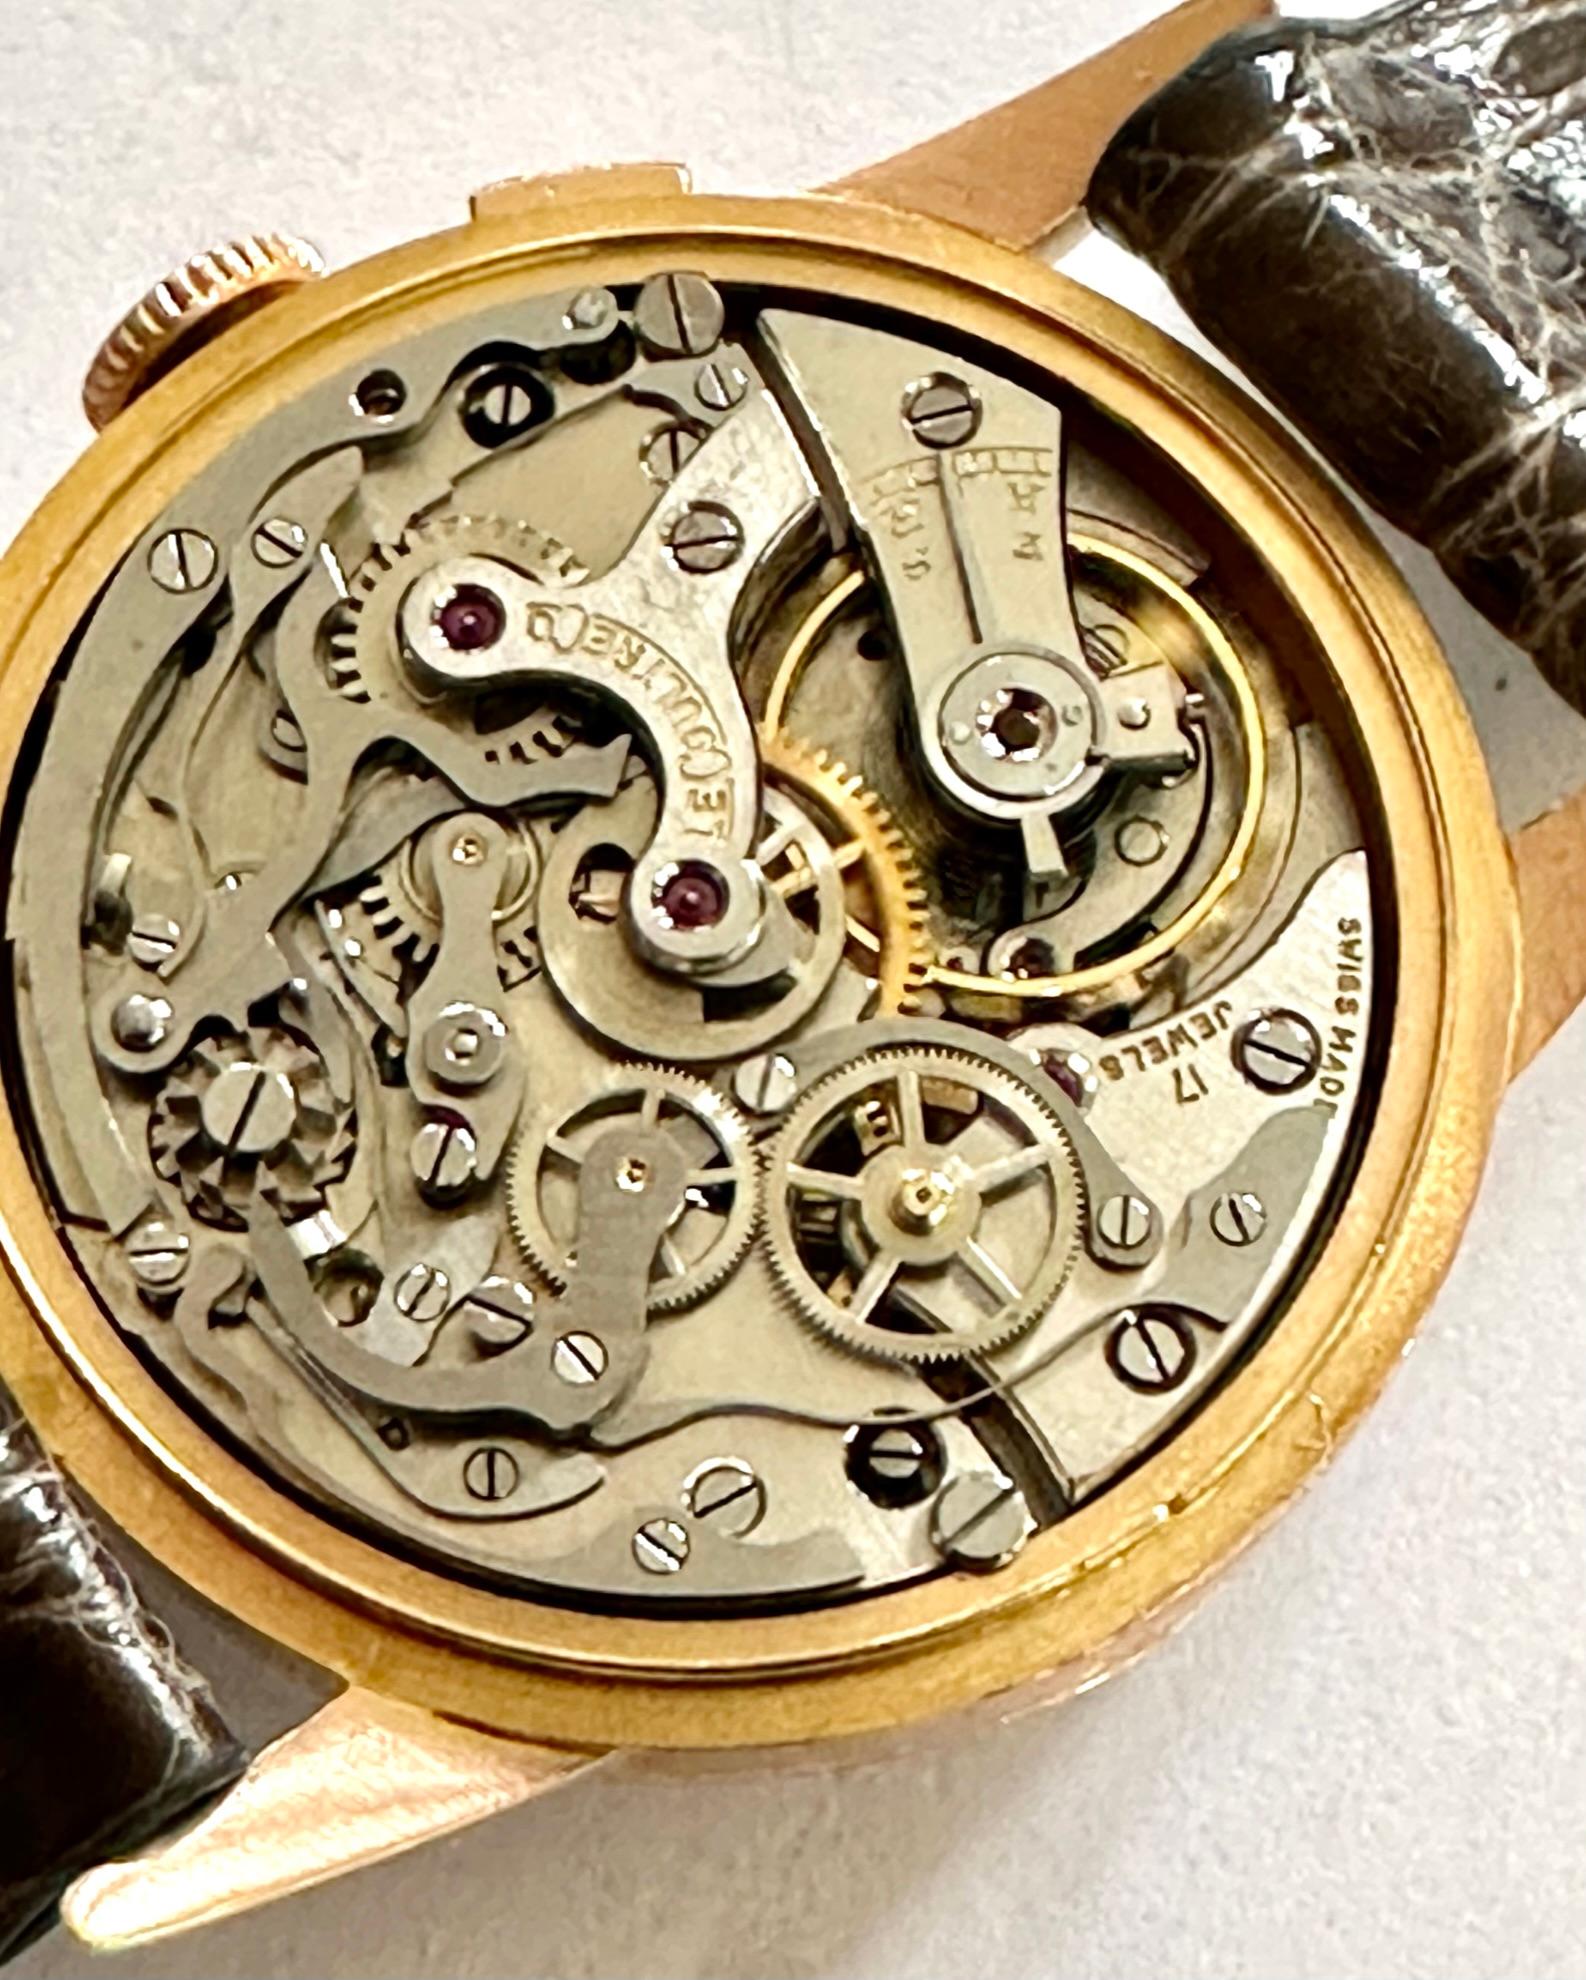 Le Coultre Chronograph 18k Rose Gold Watch, Valjoux 72 Movement, circa 1950 1